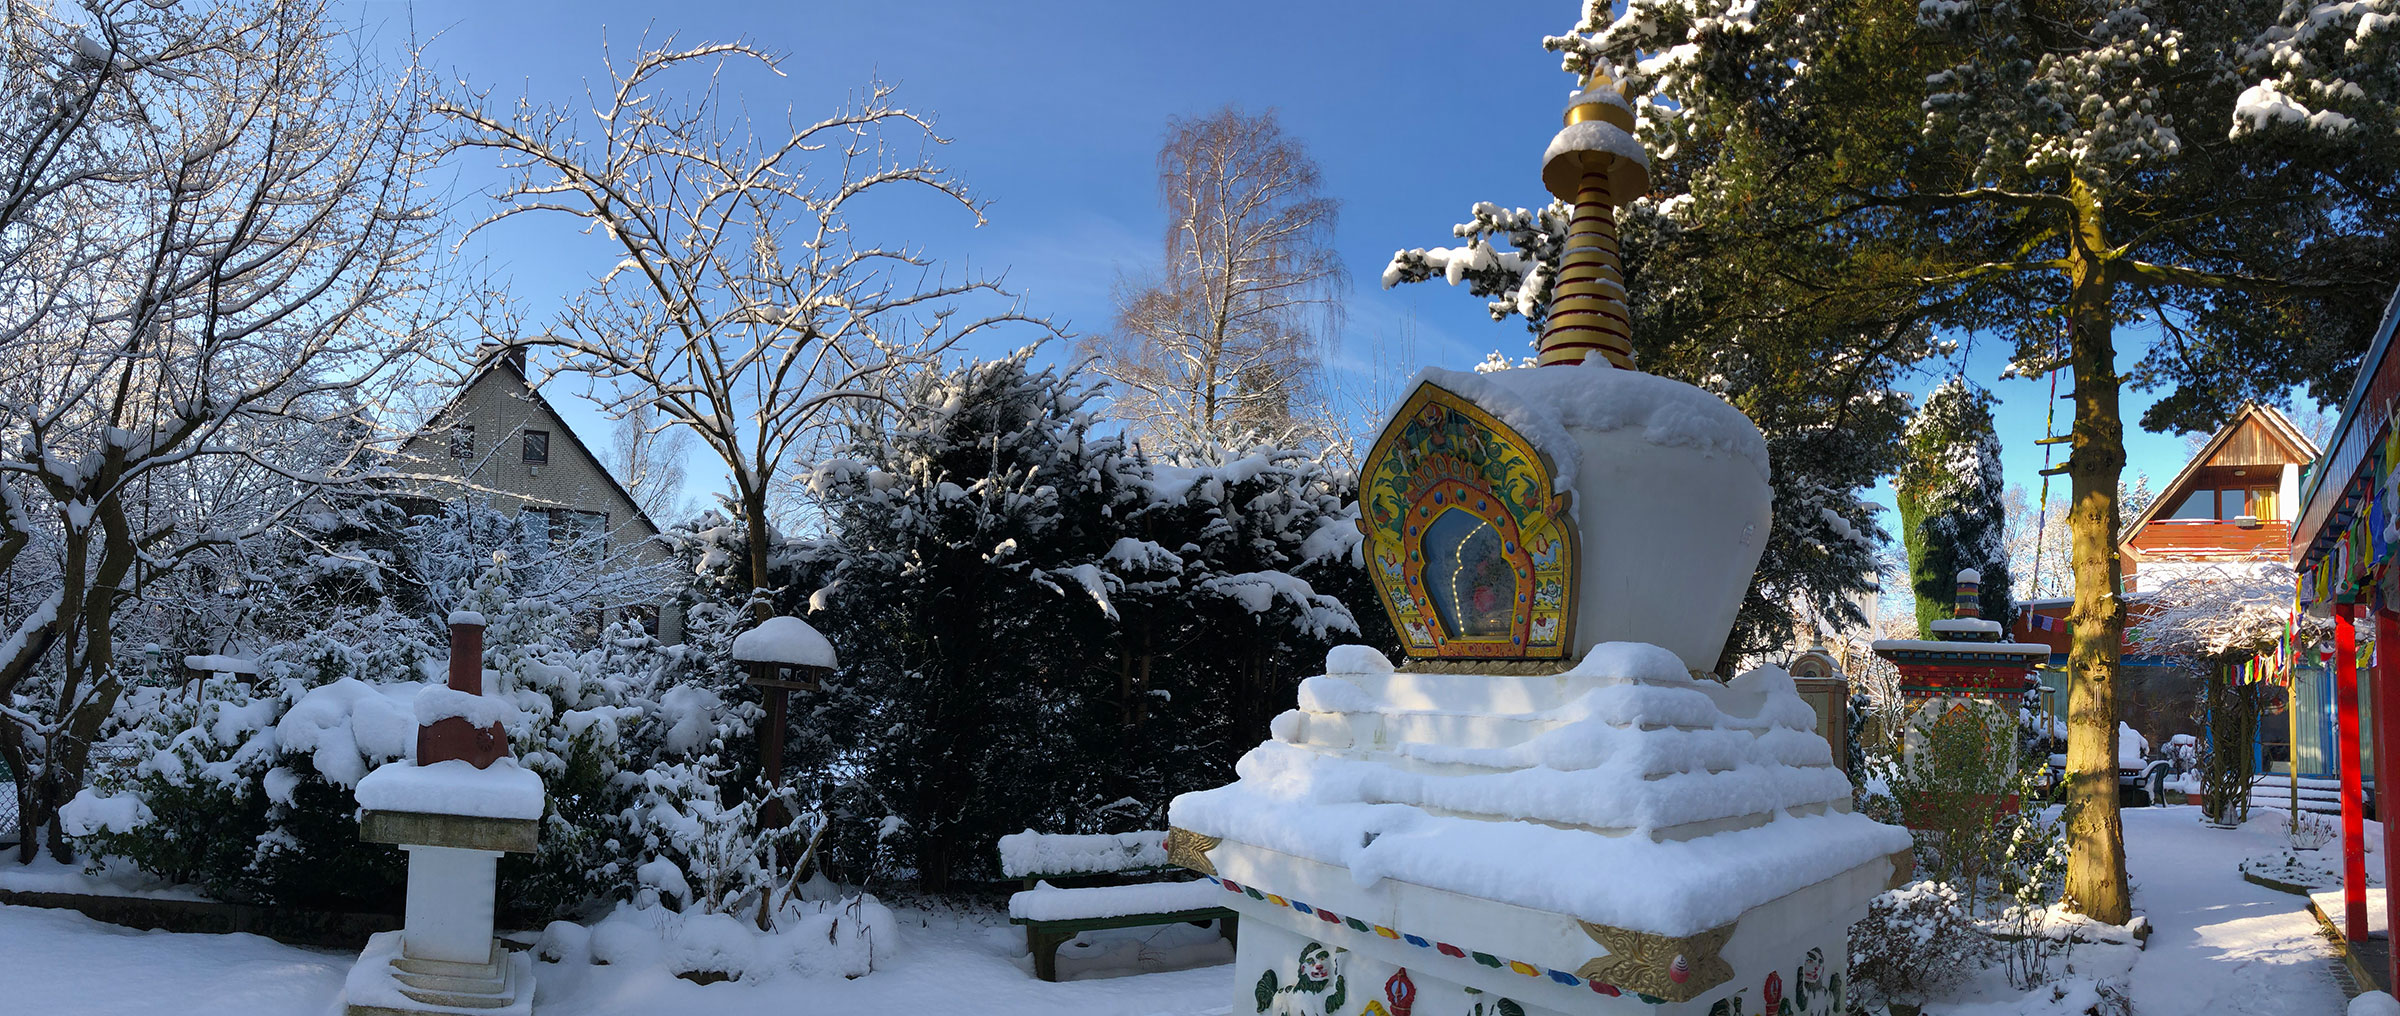 standort berne garten stupa schnee